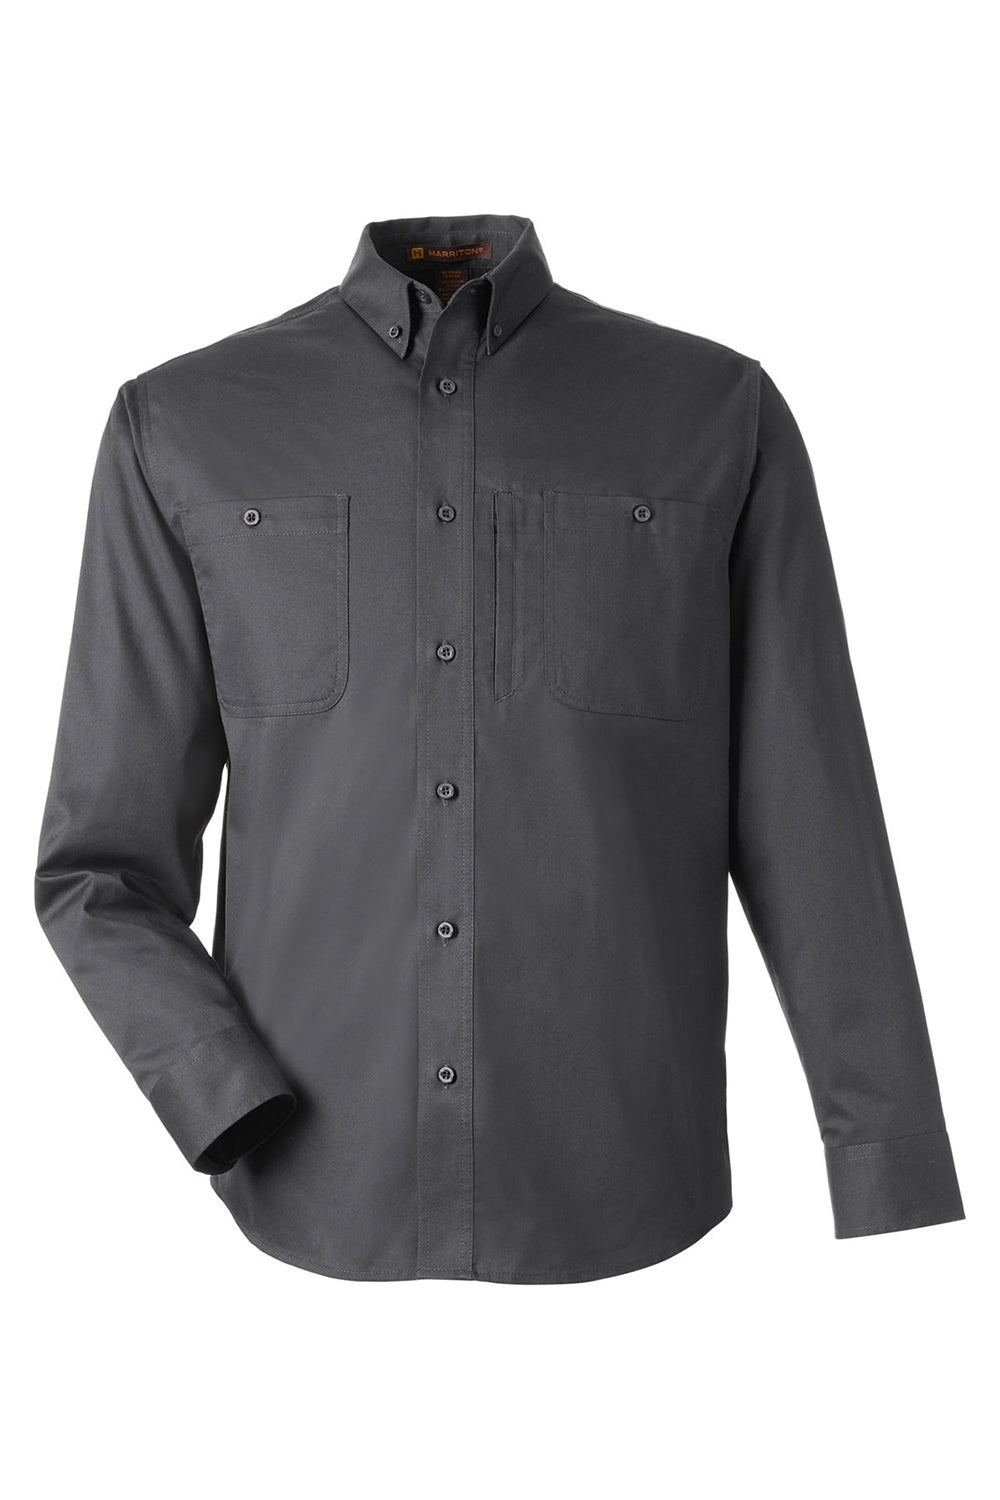 Harriton M585L Mens Advantage Long Sleeve Button Down Shirt w/ Double Pockets Dark Charcoal Grey Flat Front